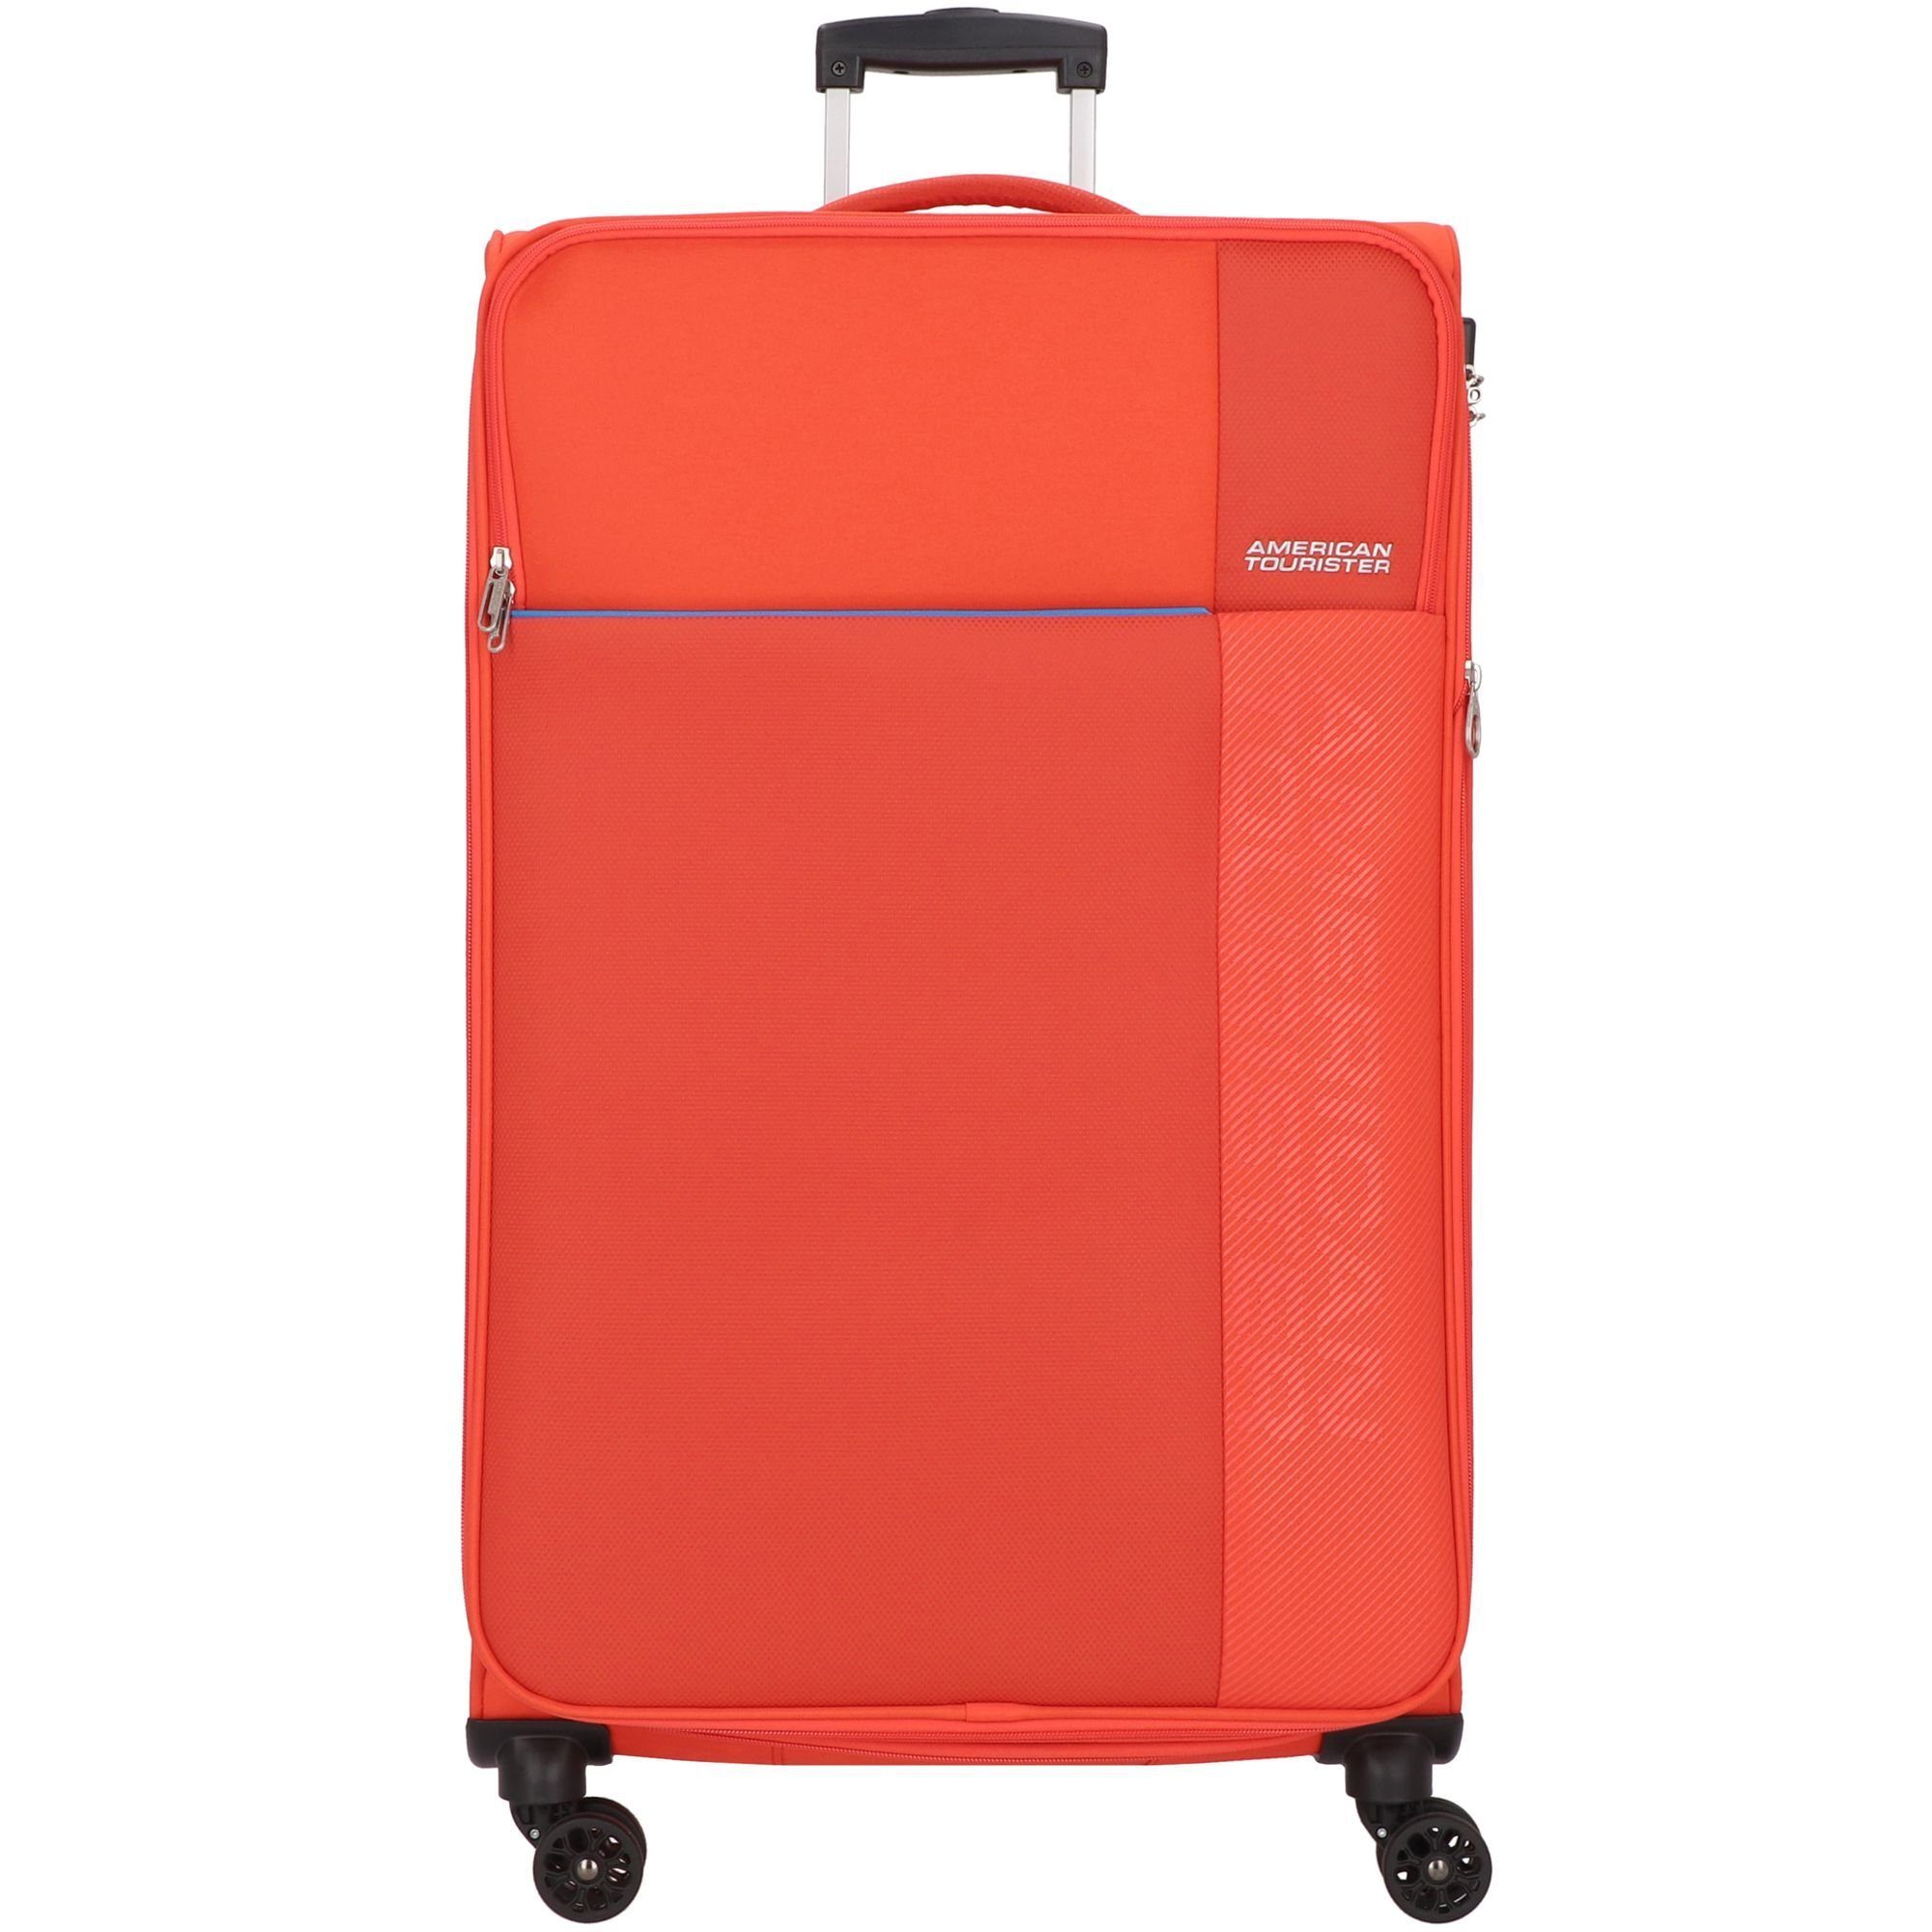 American Tourister® Weichgepäck-Trolley, 4 red blue Rollen, Polyester